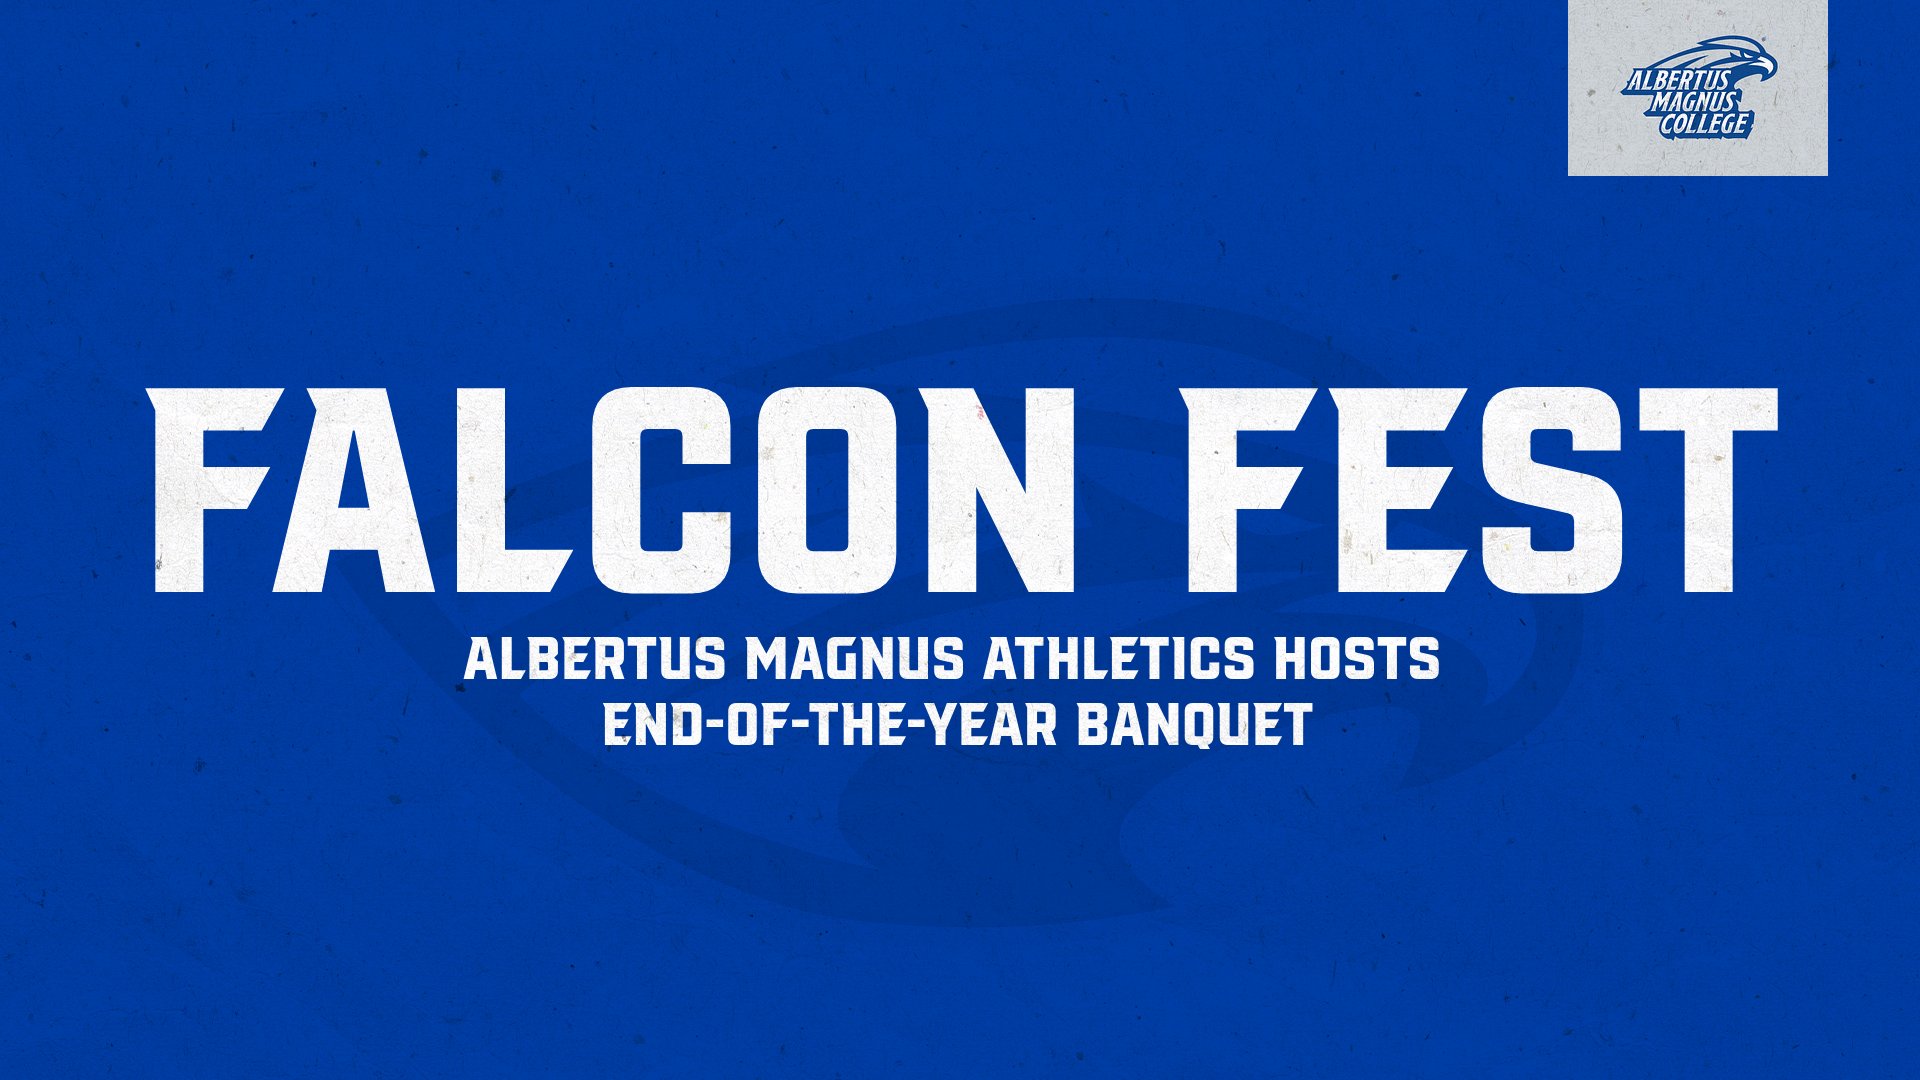 Albertus Magnus Athletics Holds &quot;Falcon Fest&quot; to Honor Student-Athletes